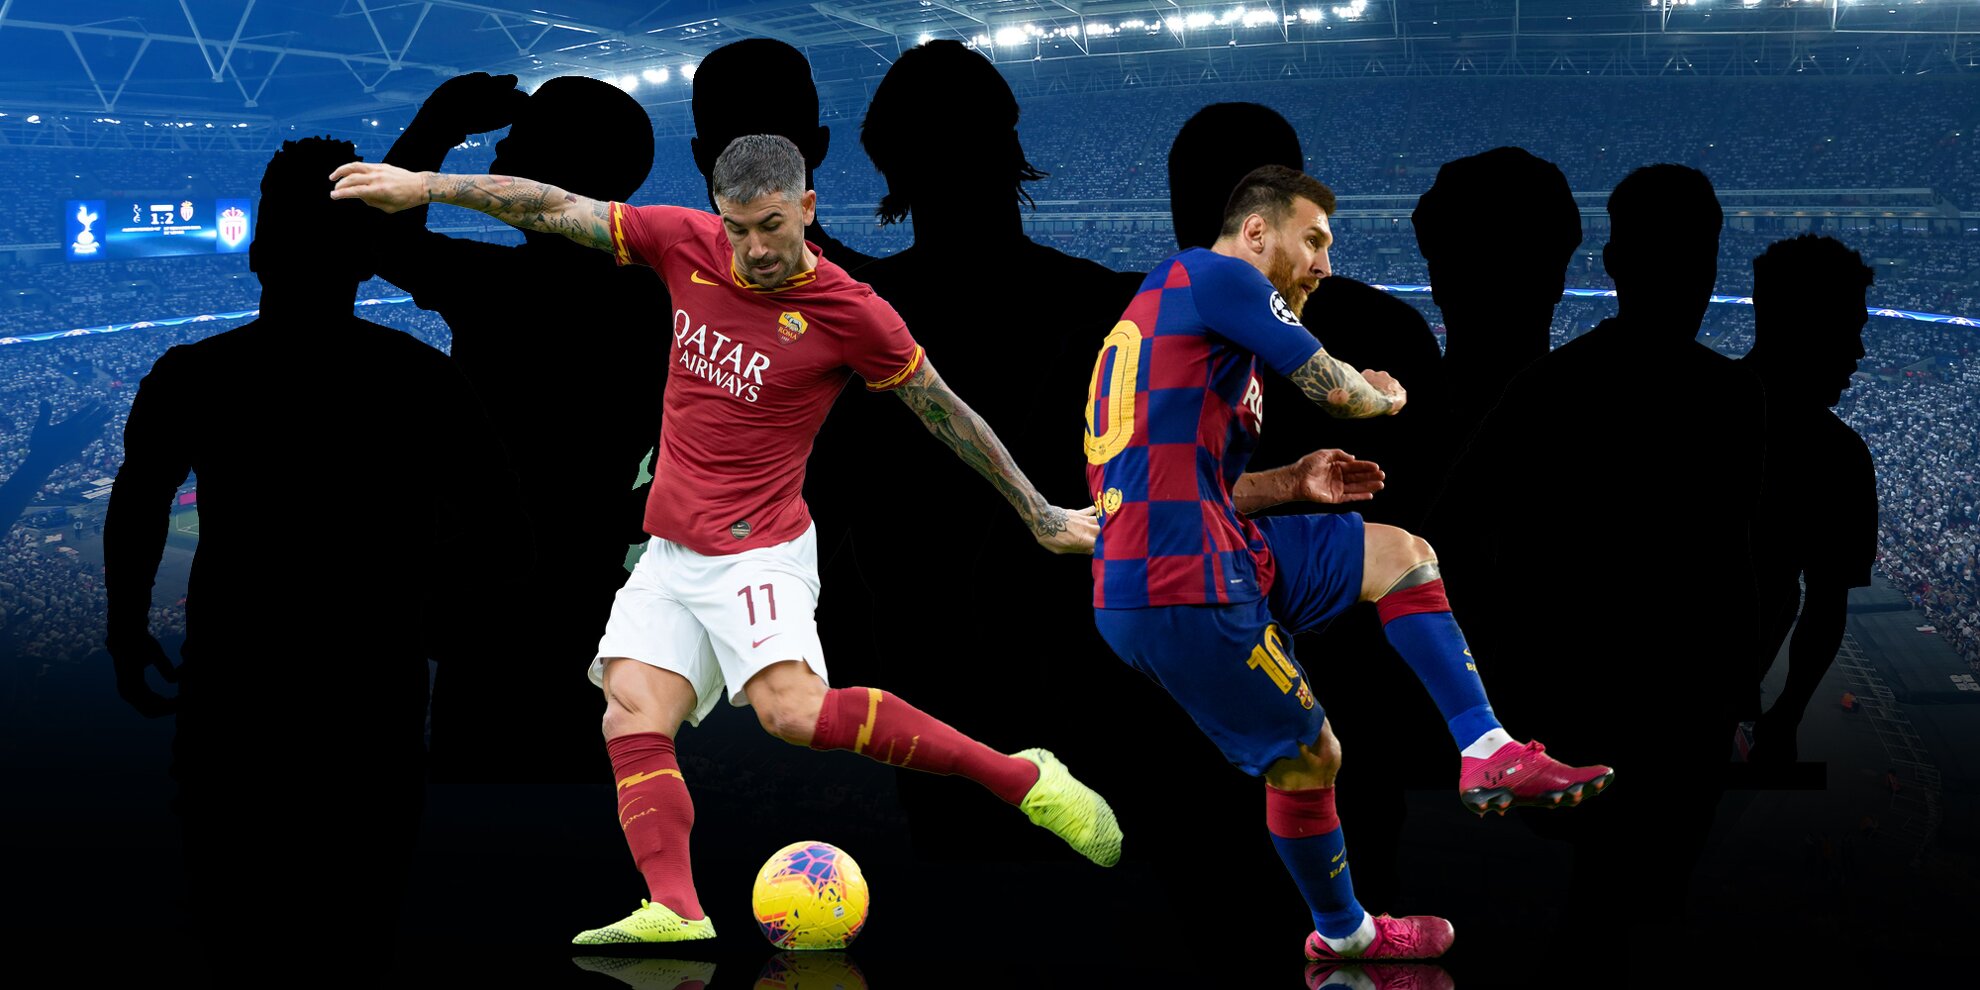 Top 10 best free-kick takers in elite European leagues